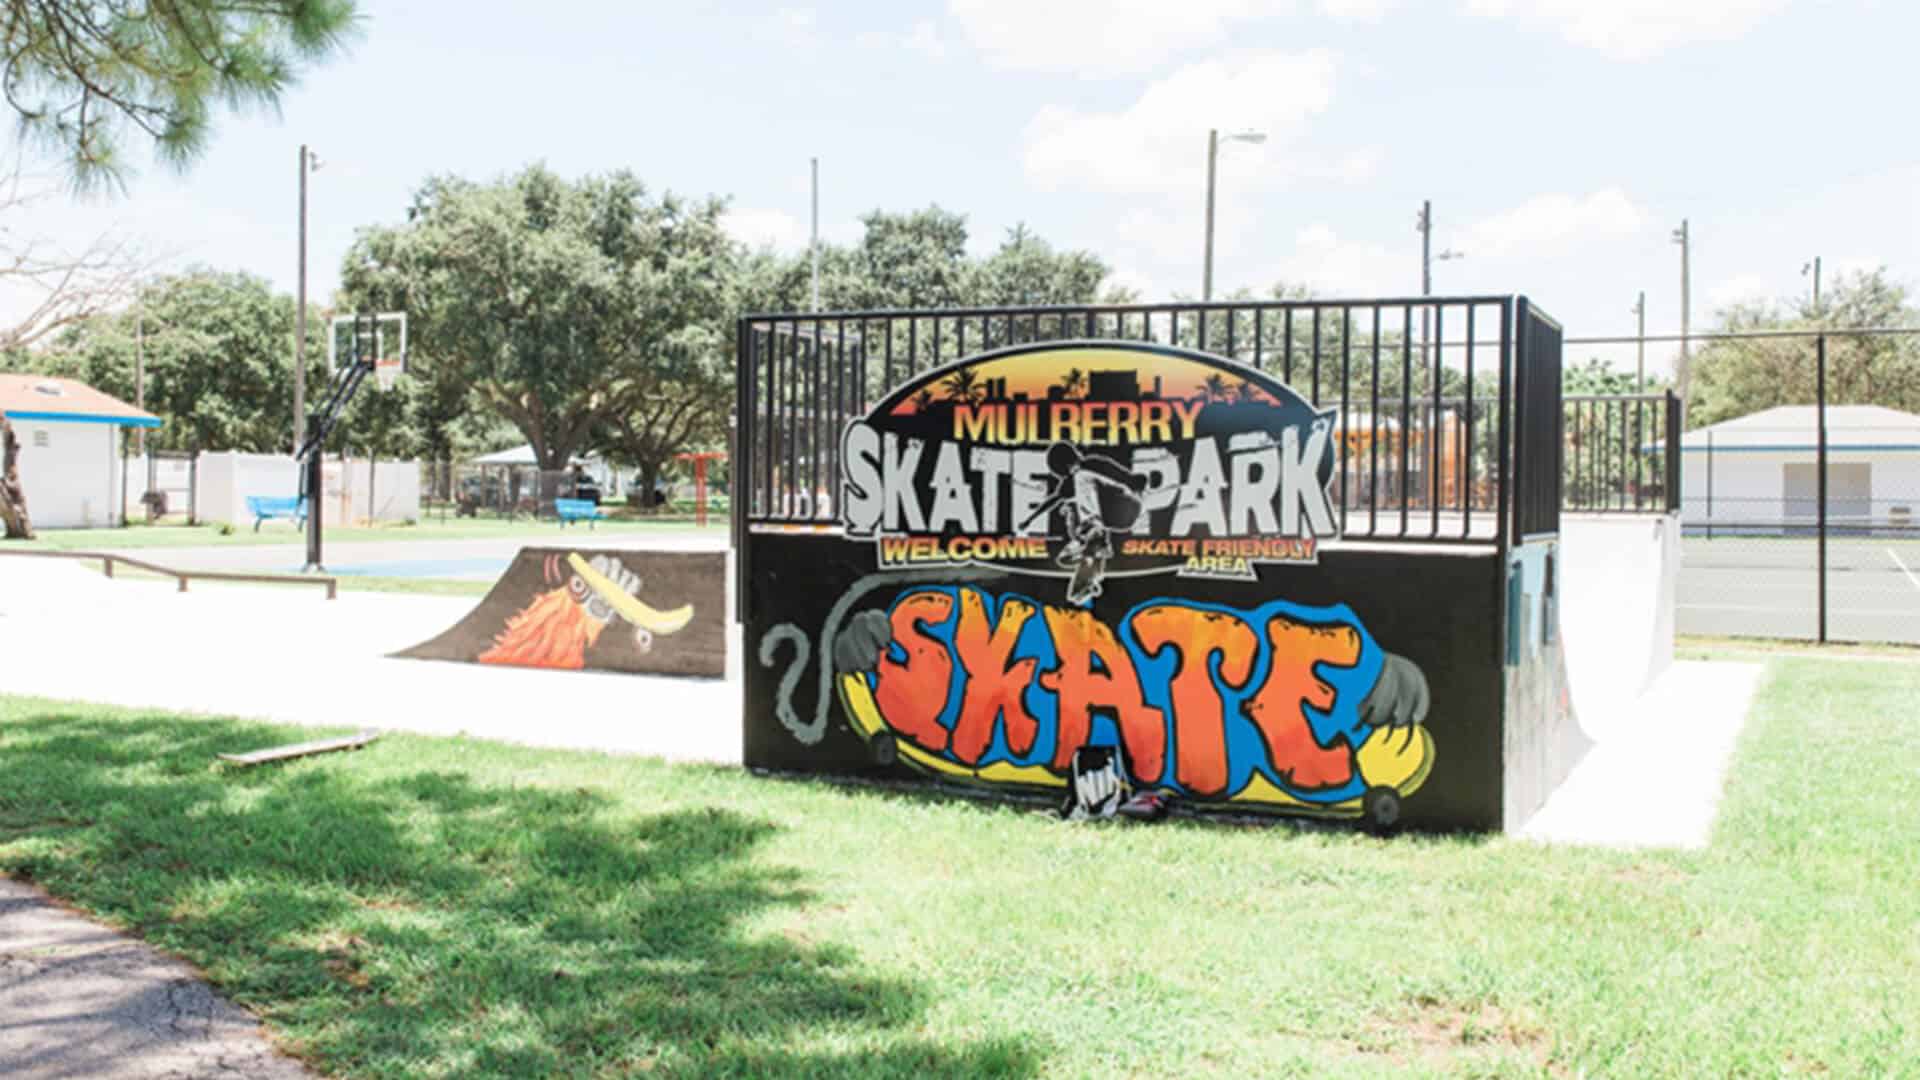 Mulberry Skate Park